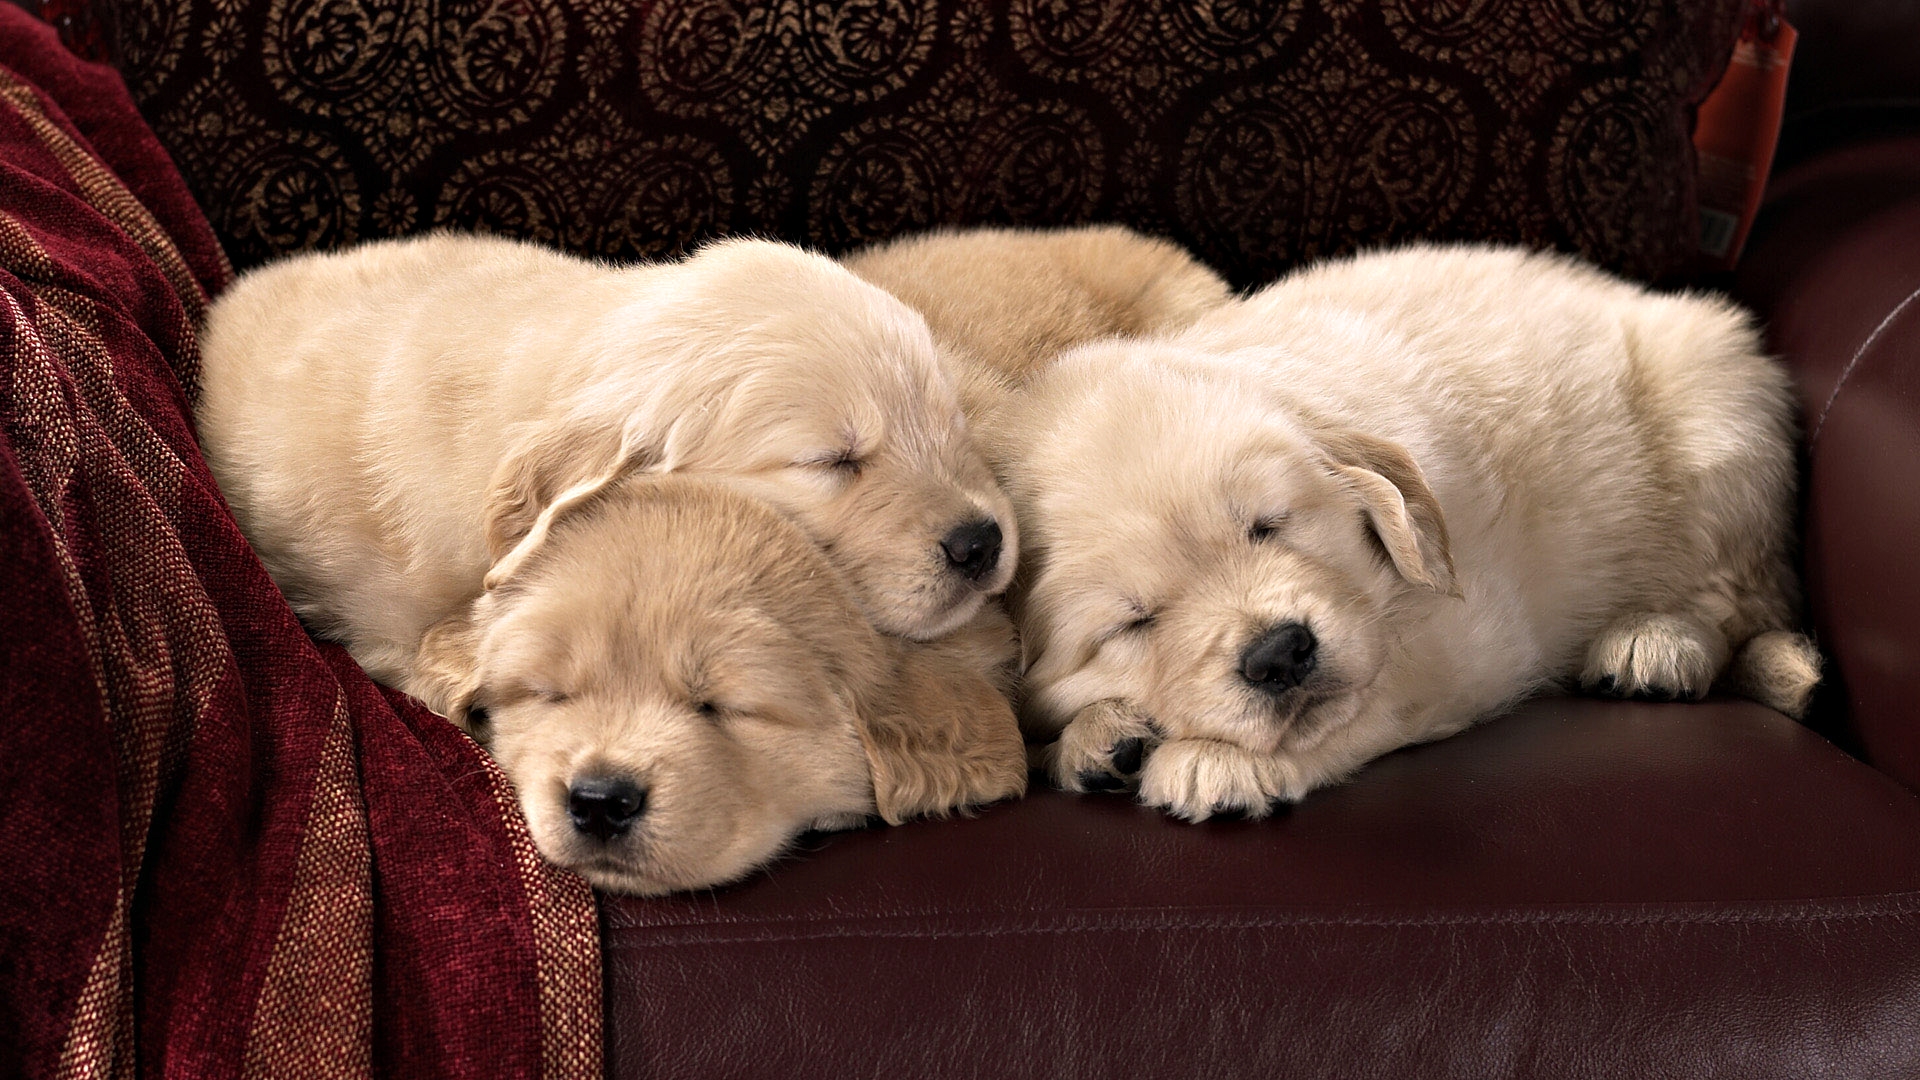 Wallpaper : puppies, labradors, kids, sleep 1920x1080 - wallup ...